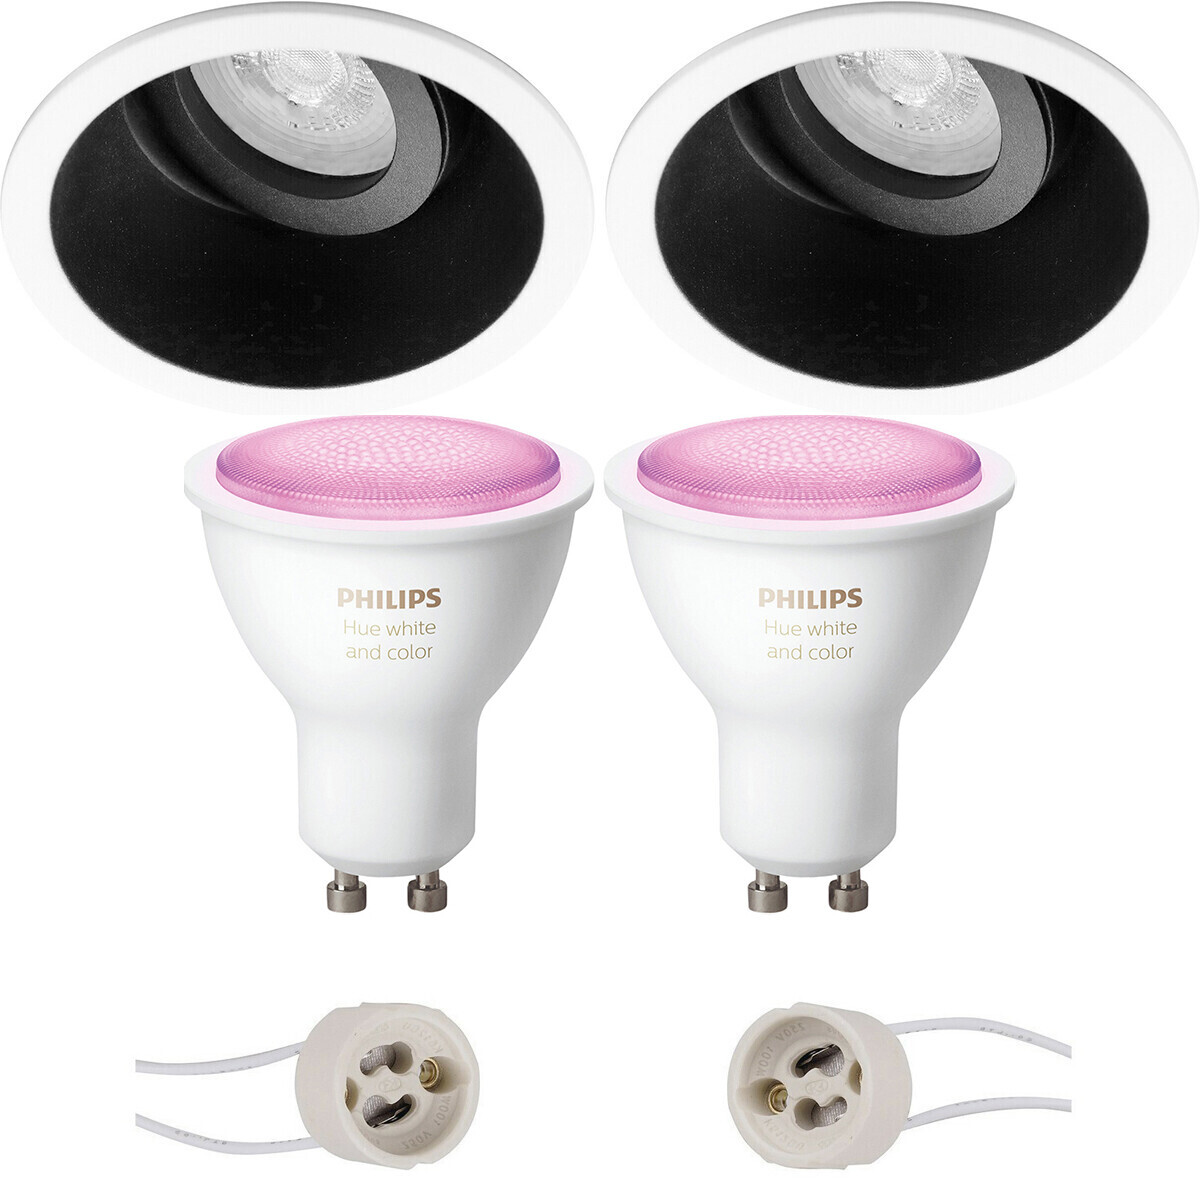 BES LED Pragmi Zano Pro - Inbouw Rond - Mat Zwart/Wit - Kantelbaar - Ø93mm - Philips Hue - LED Spot Set GU10 - White and Color Ambiance - Bluetooth